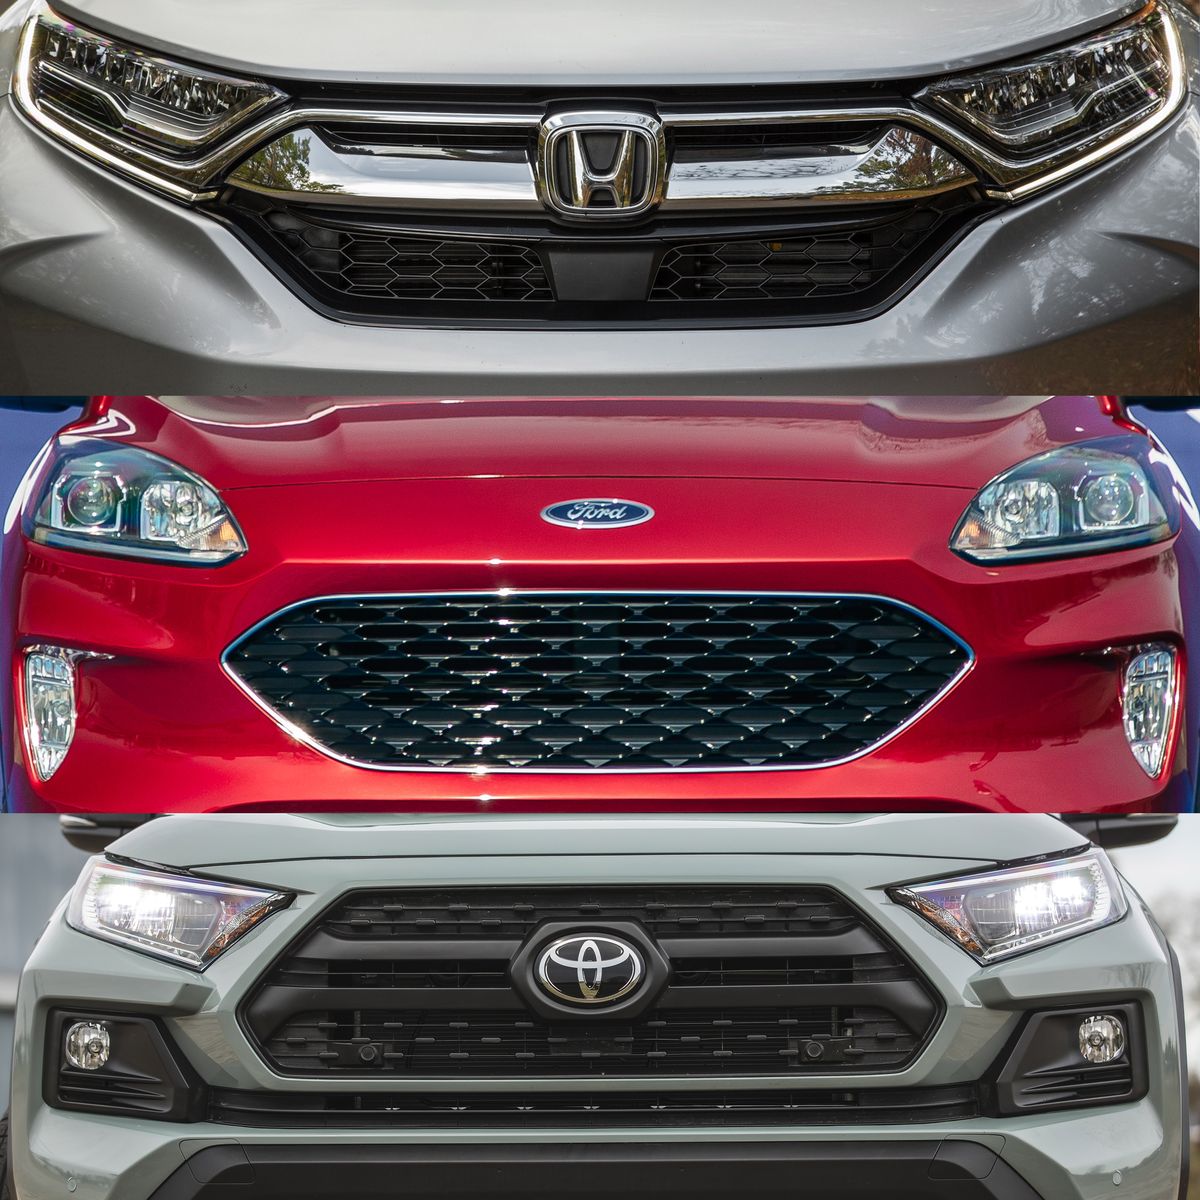 Ford Escape vs. Honda CR-V vs. Toyota RAV4